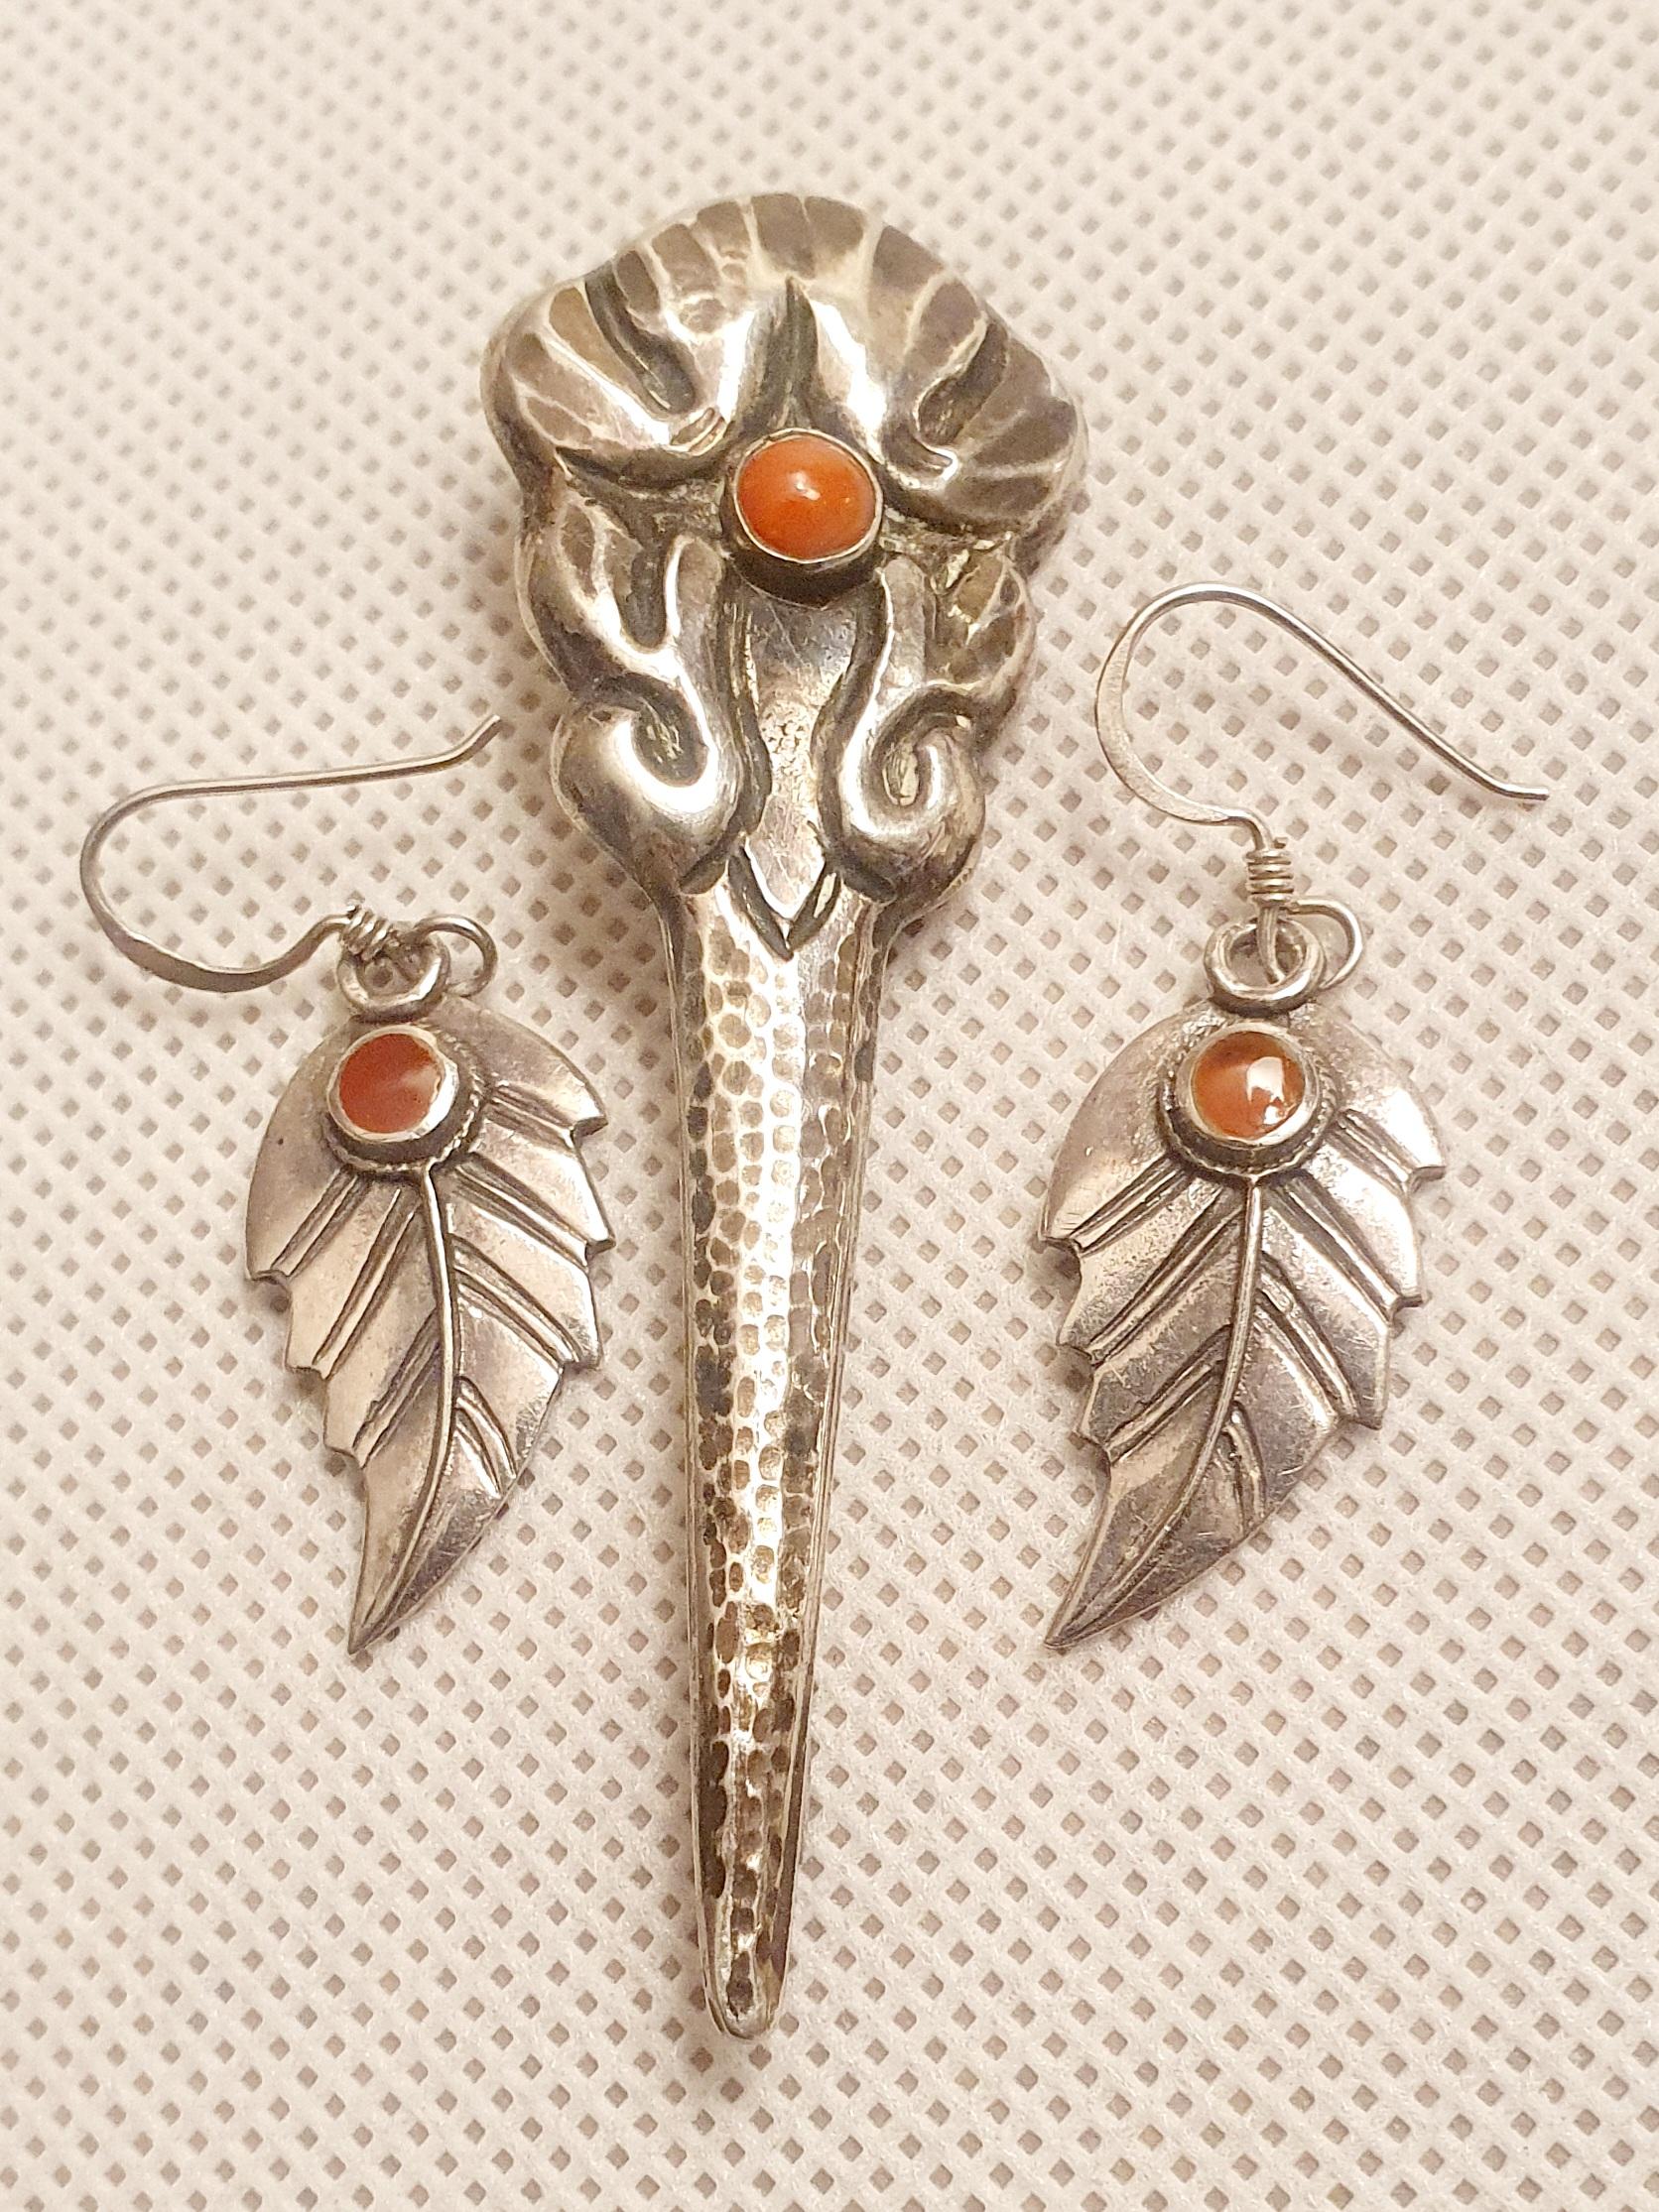 Pair of Scandinavian Silver Carnelian Earrings and Matching Silver Brooch